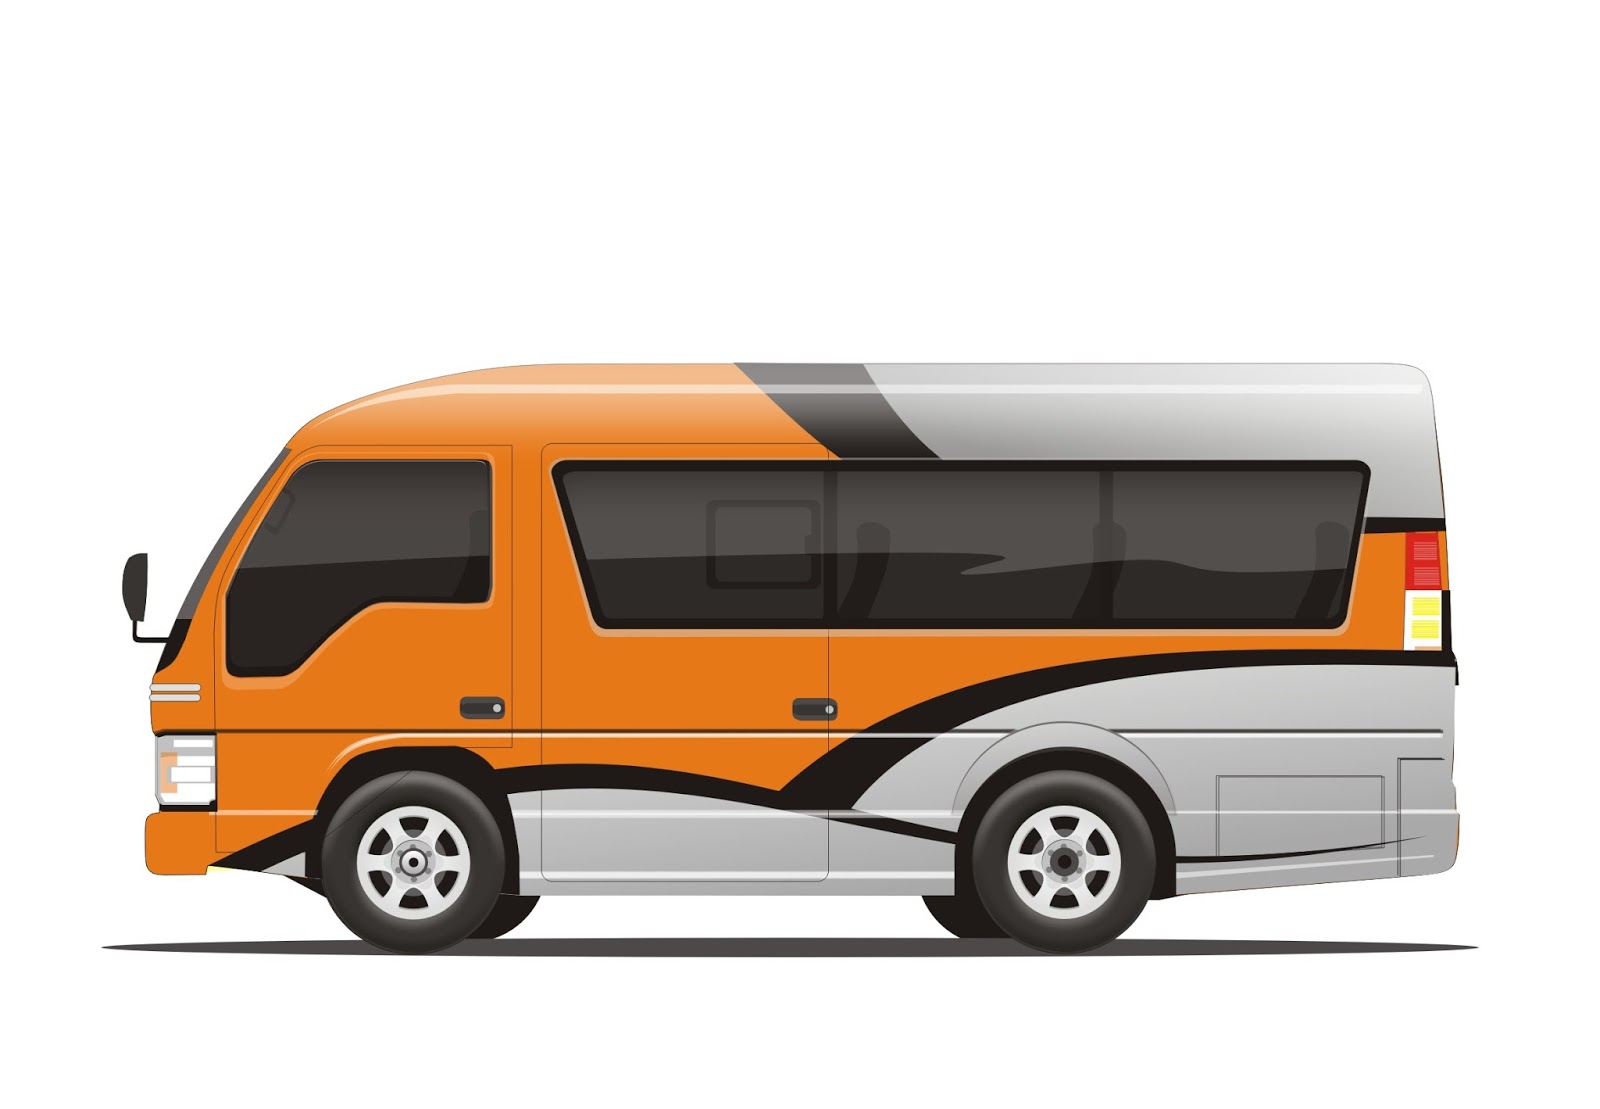 Jasa Design Livery Bus, Medium Bus, Elf, Truck  AfatBenz 